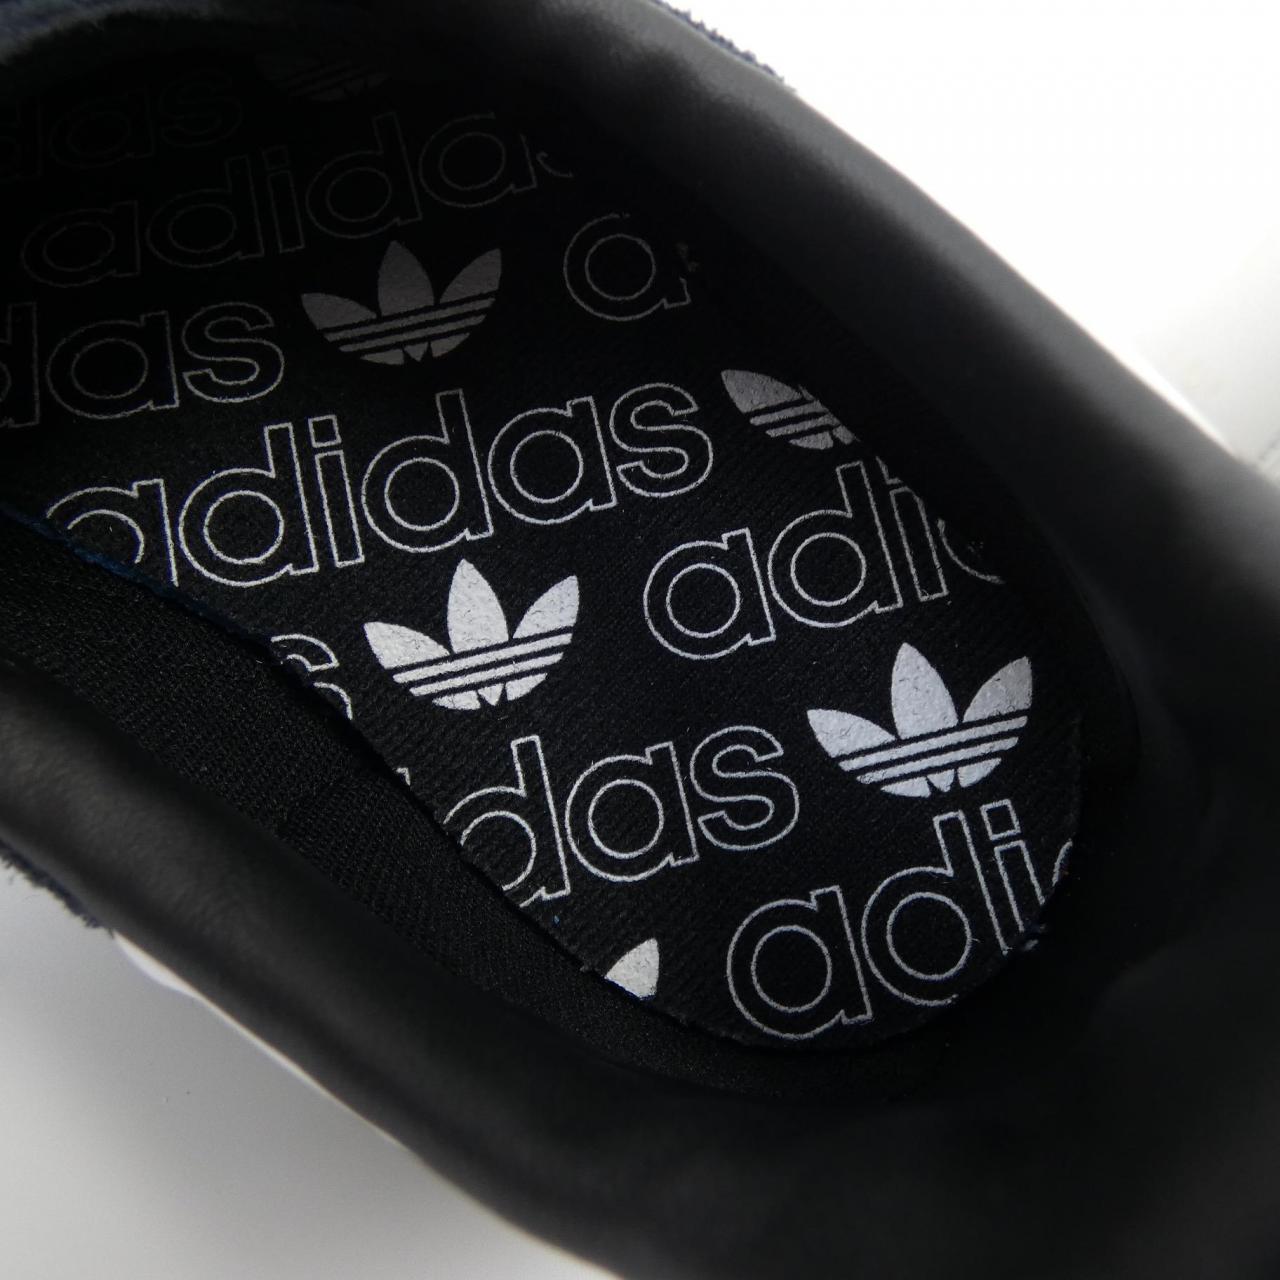 Adidas ADIDAS sneakers